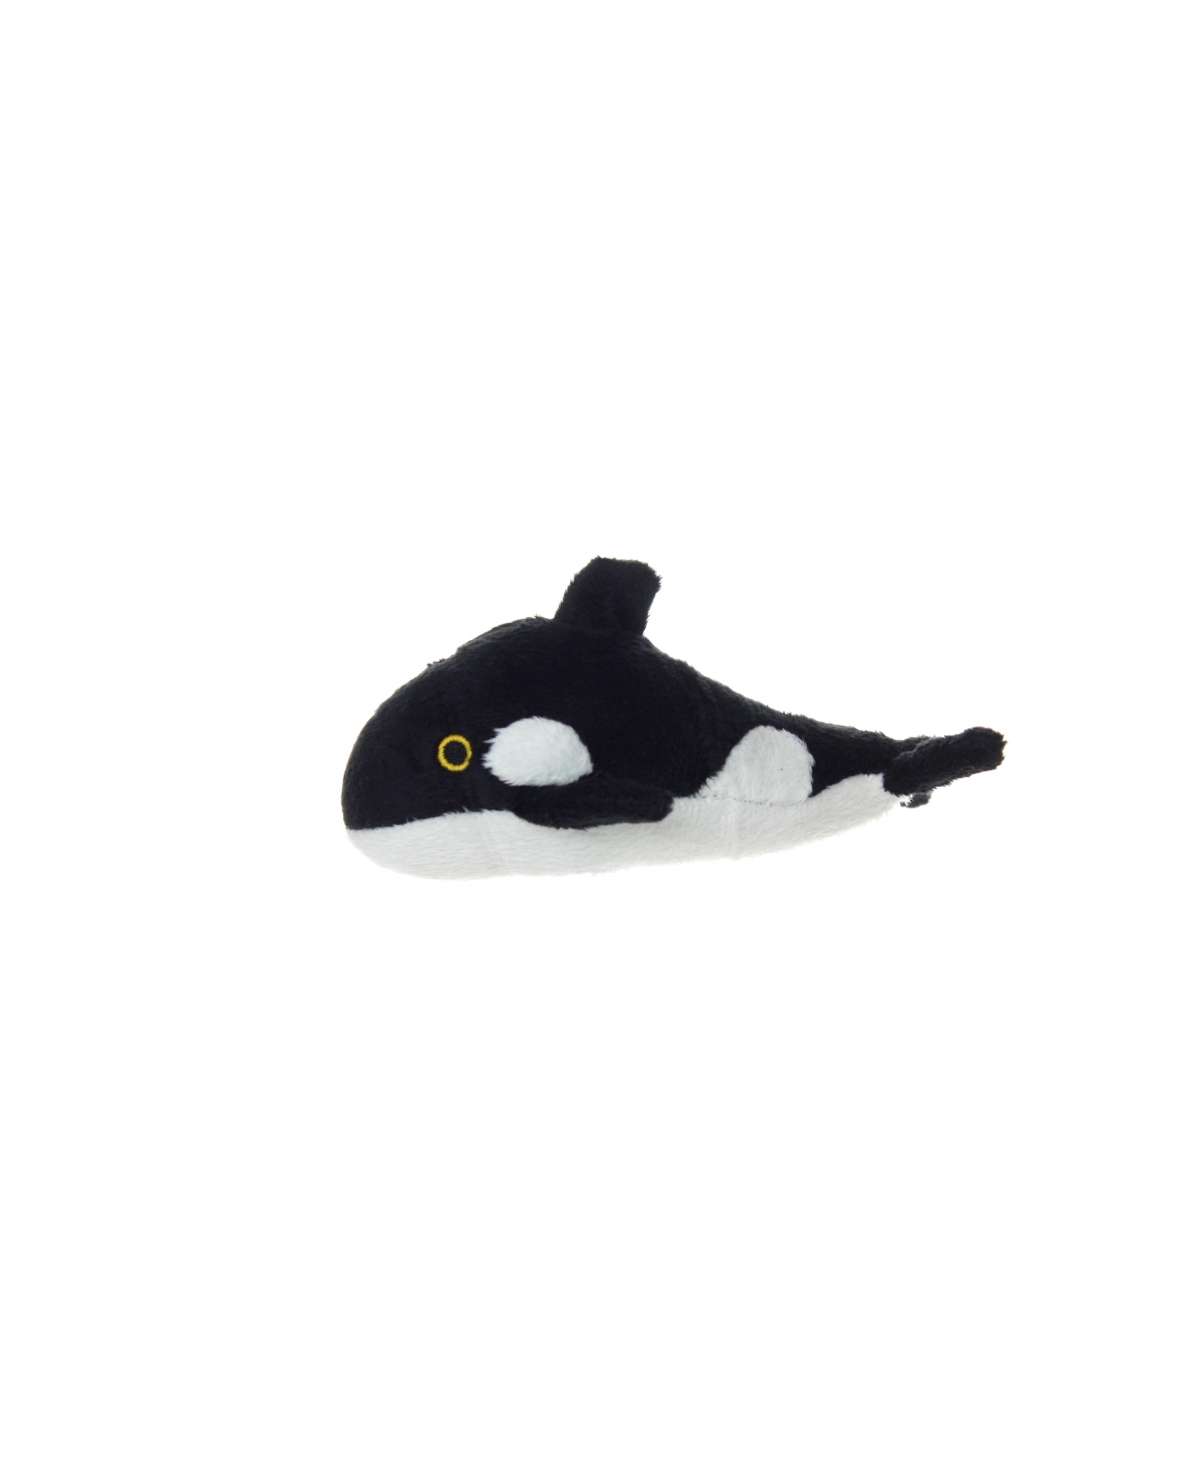 Jr Ocean Whale, Dog Toy - Black